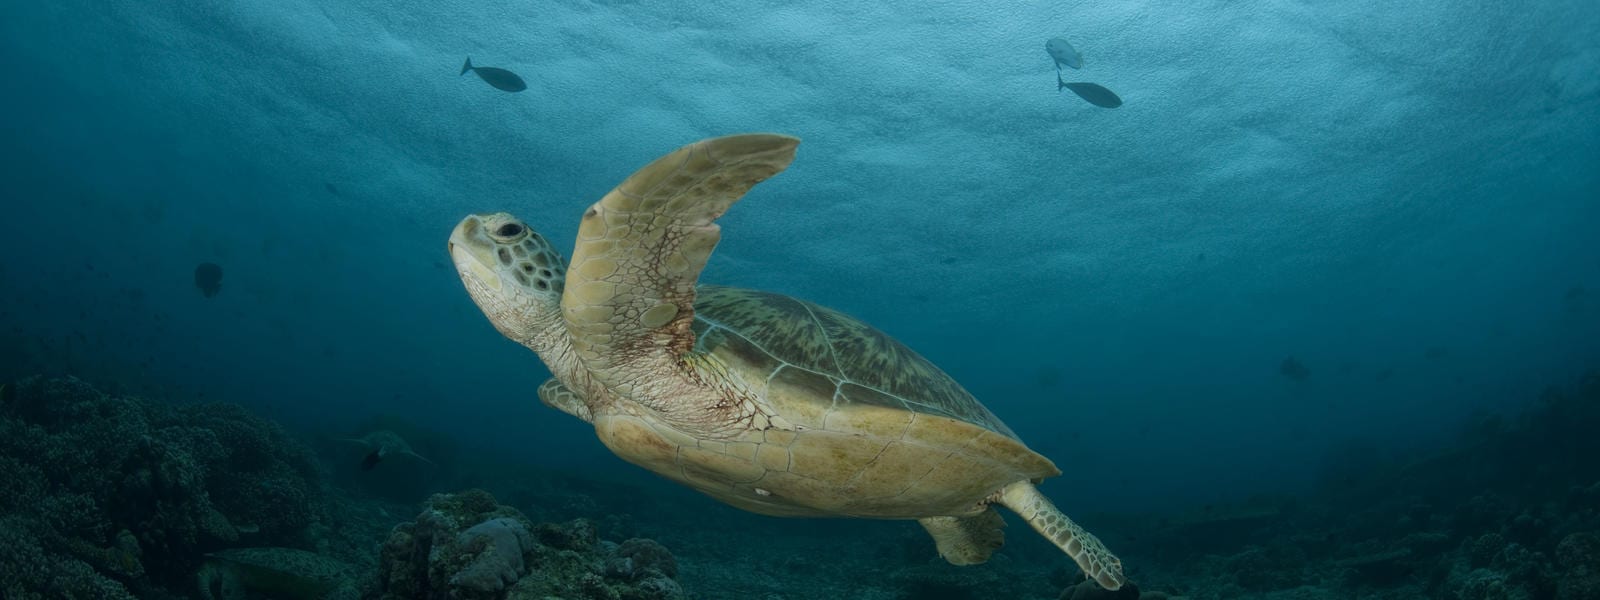 Tartarugas marinhas - características típicas das espécies